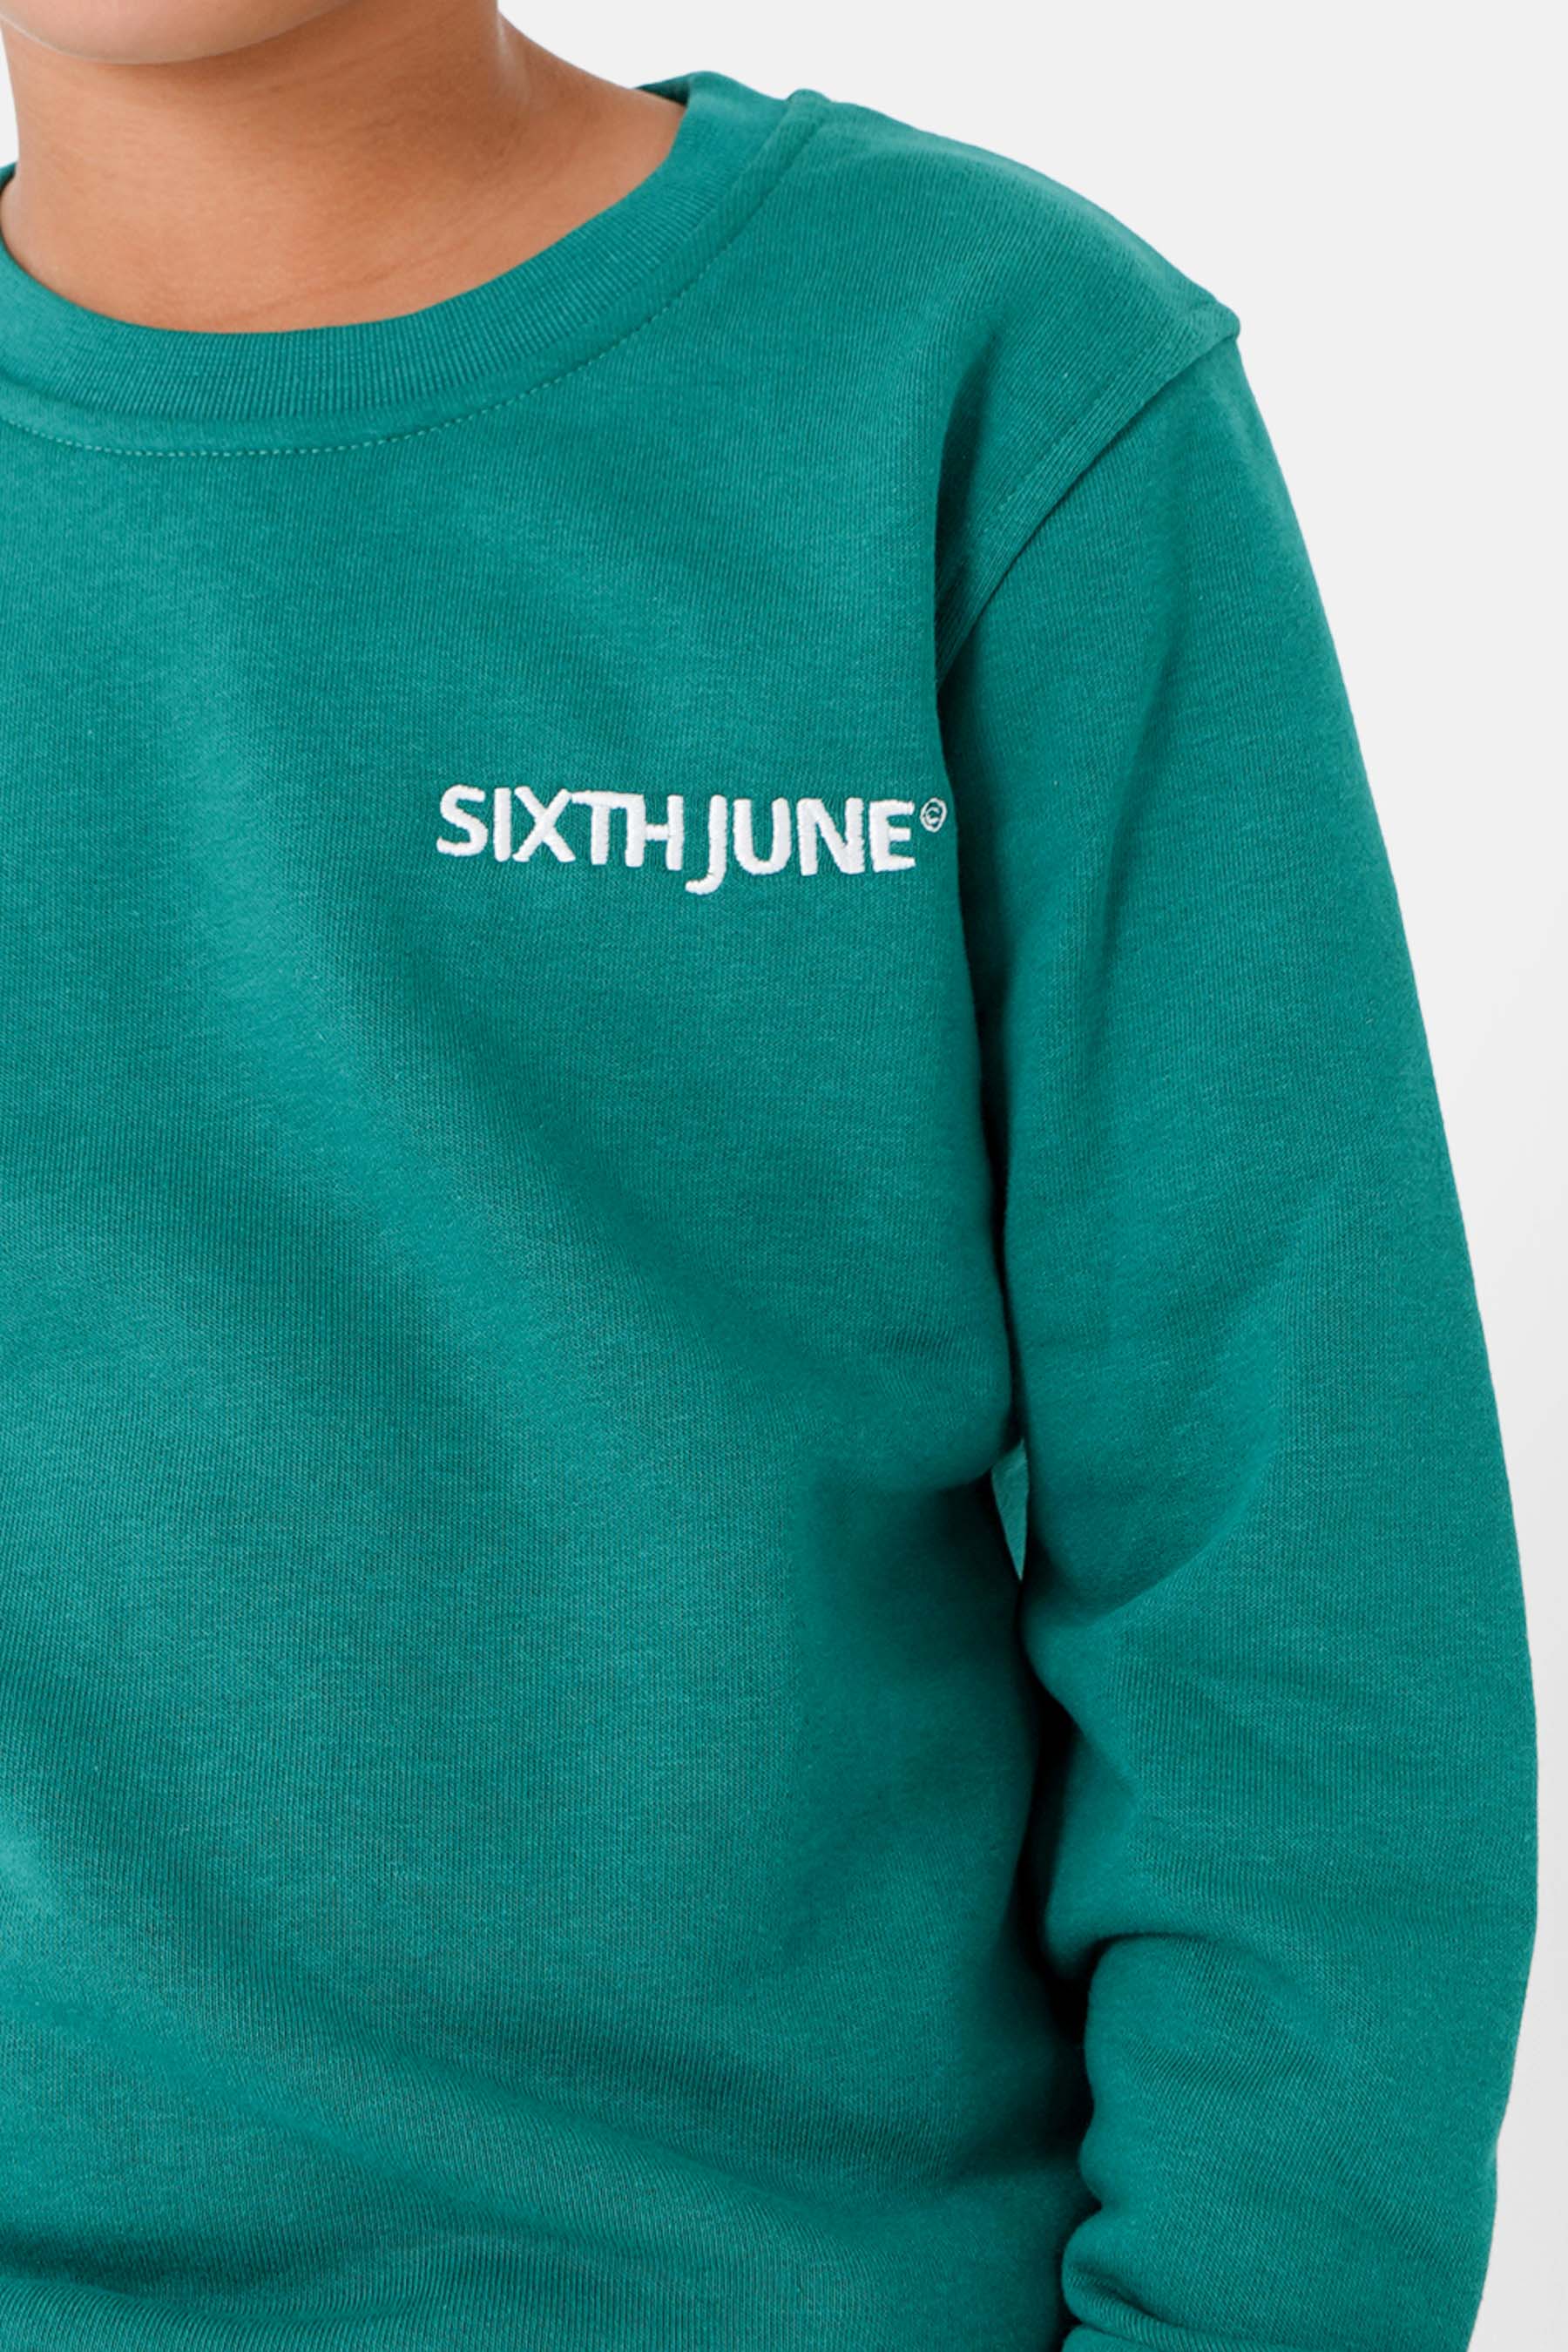 Sixth June - Sweatshirt soft logo brodé junior Vert